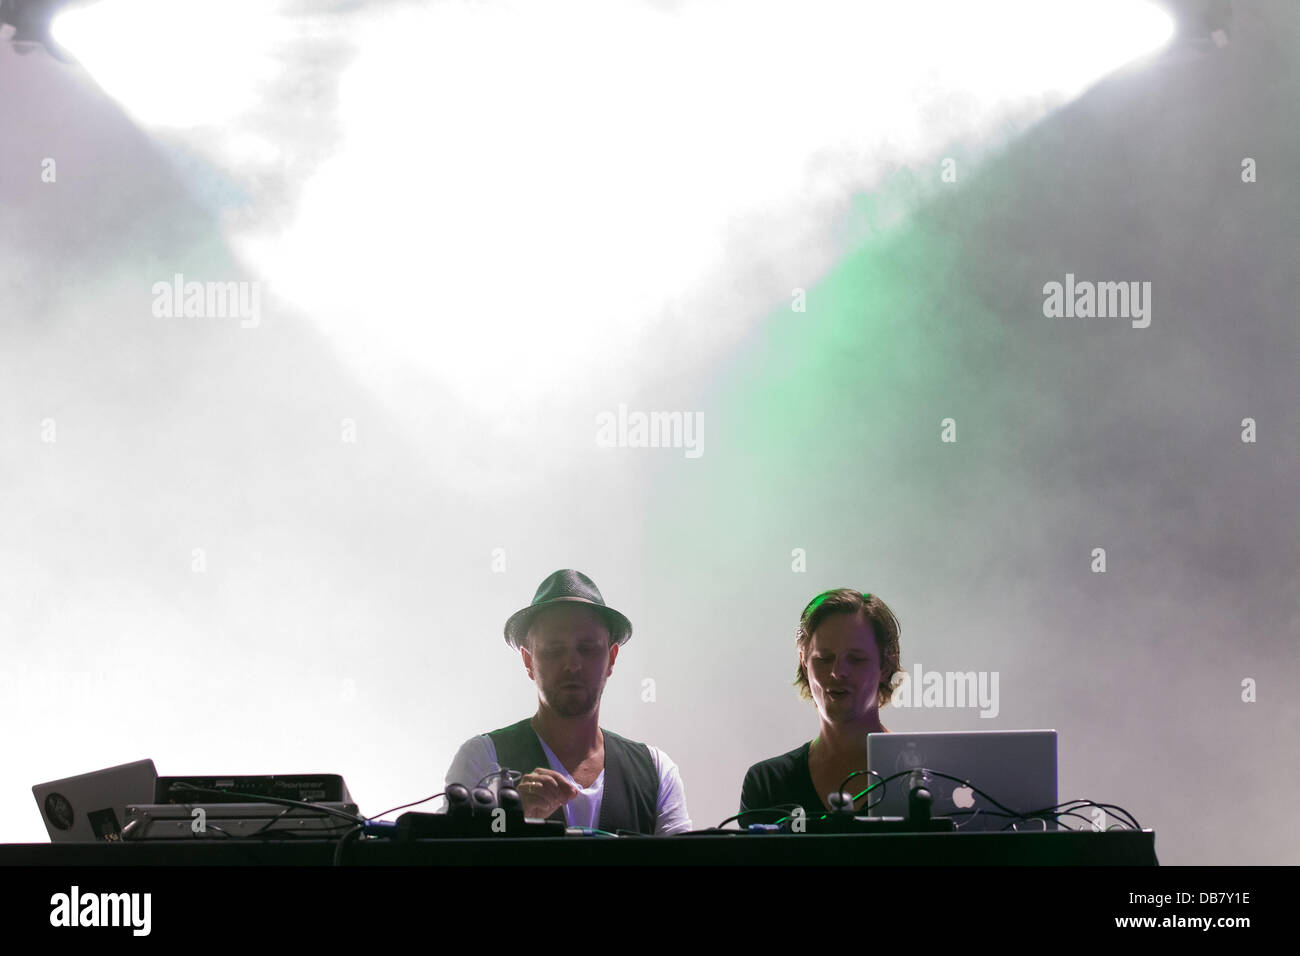 German DJ duo 'Booka Shade' performing live at Semana Academica de Lisboa at Estadio do Restelo in Belem - Day 3 Lisbon, Portugal - 14.05.11 Stock Photo